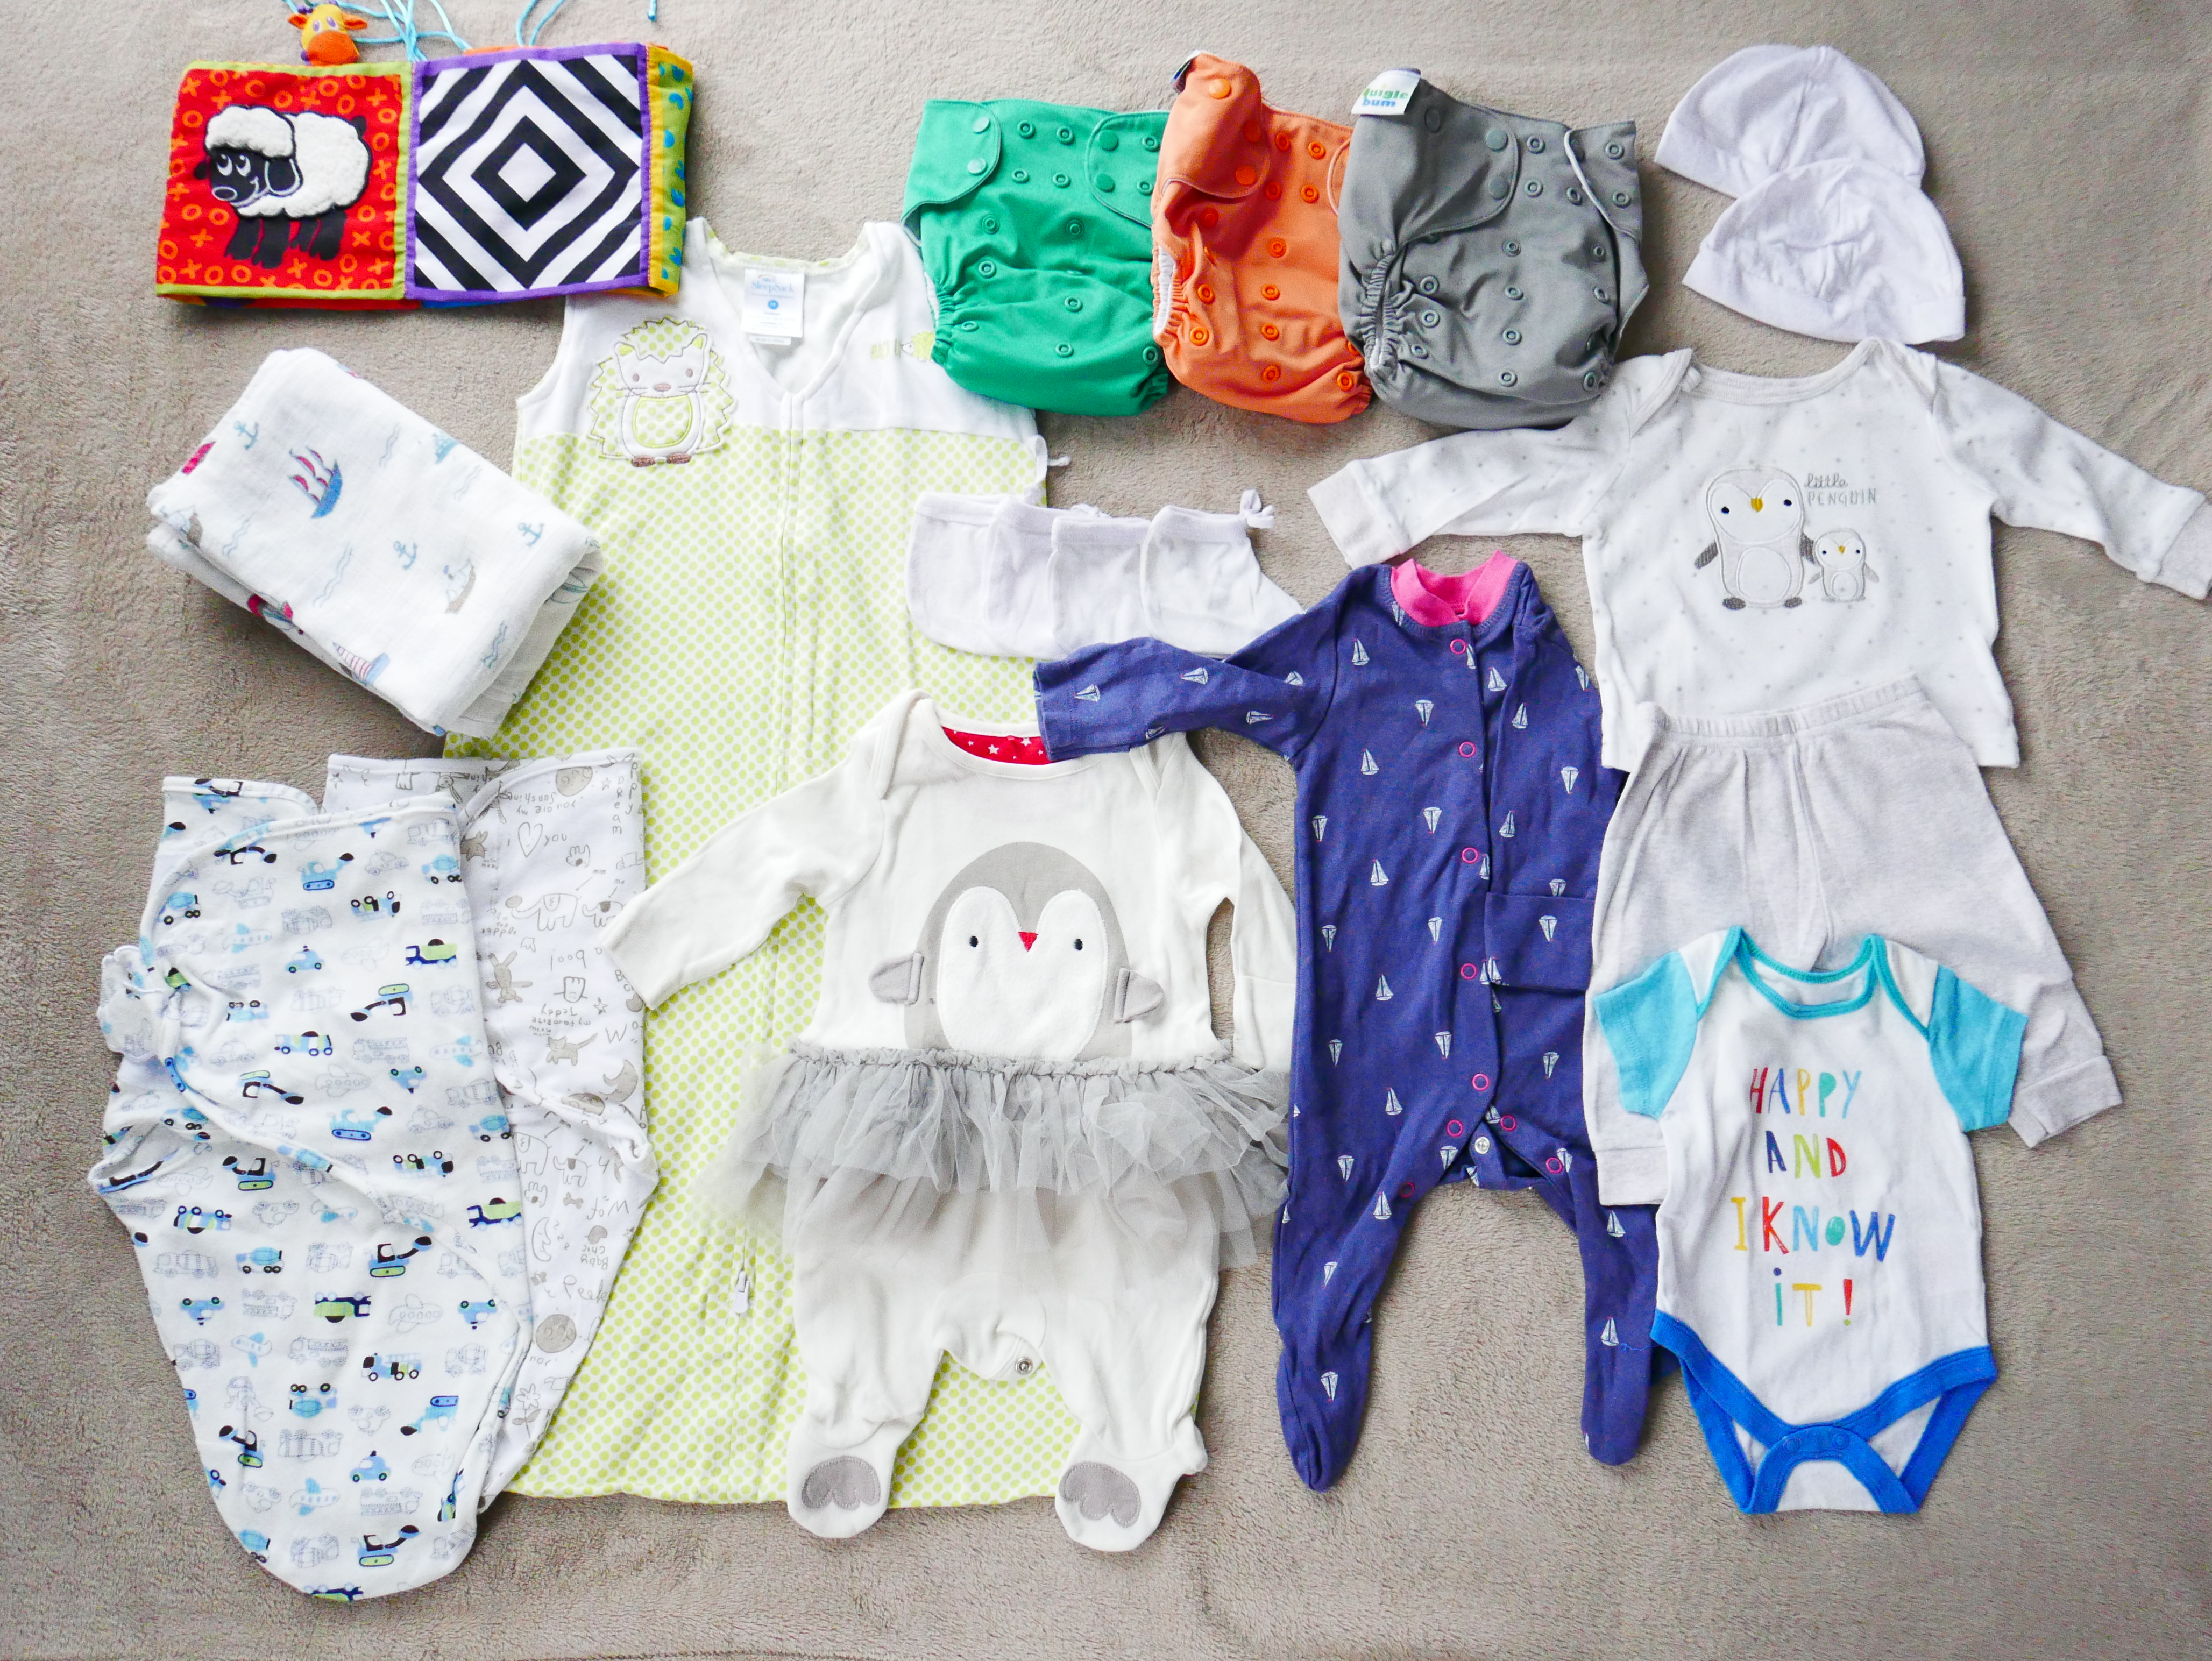 newborn baby clothes